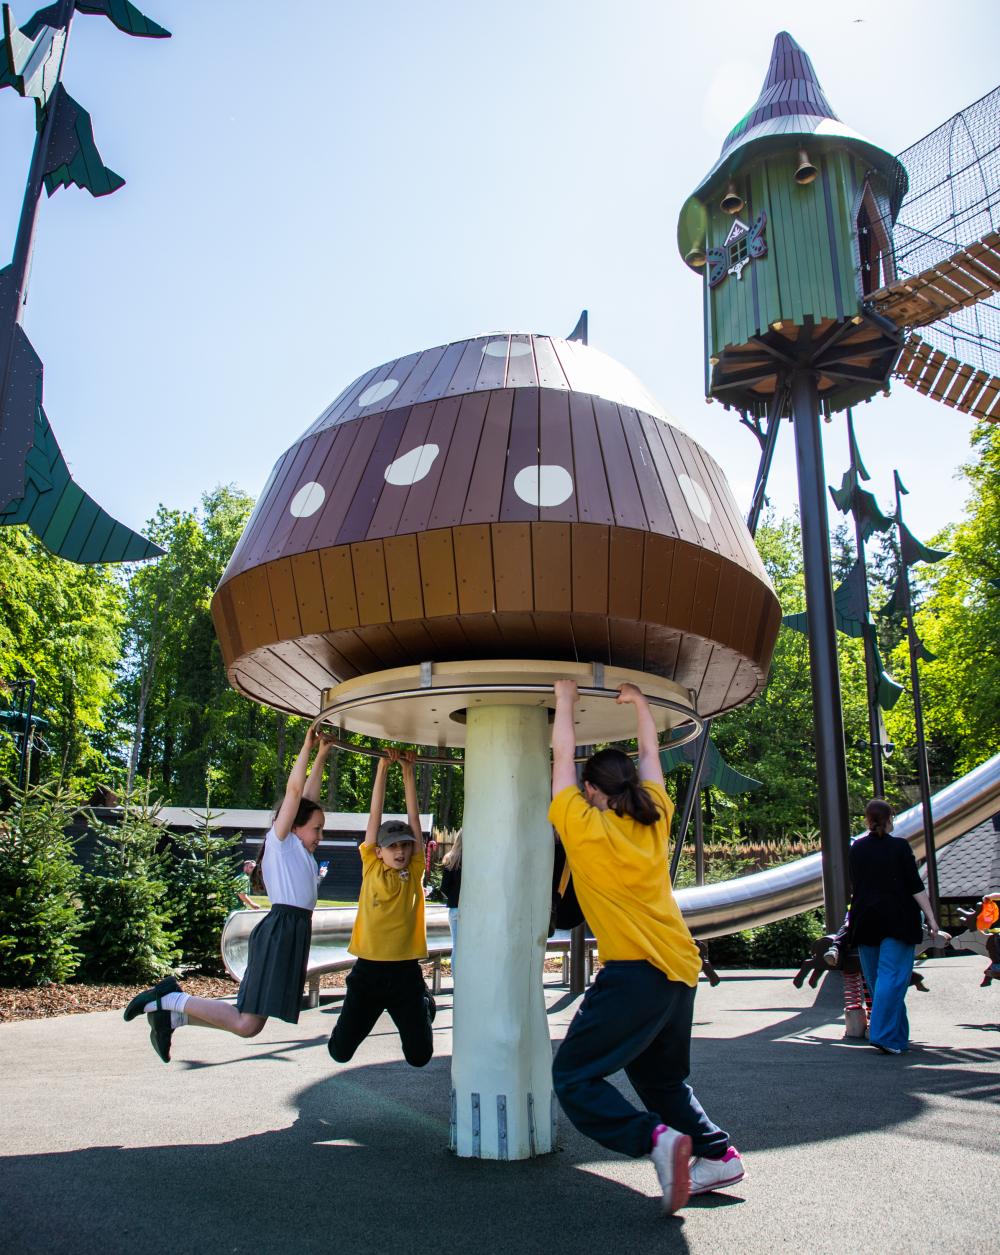 Kids spin around on mushroom carrousel at Lilidorei playground